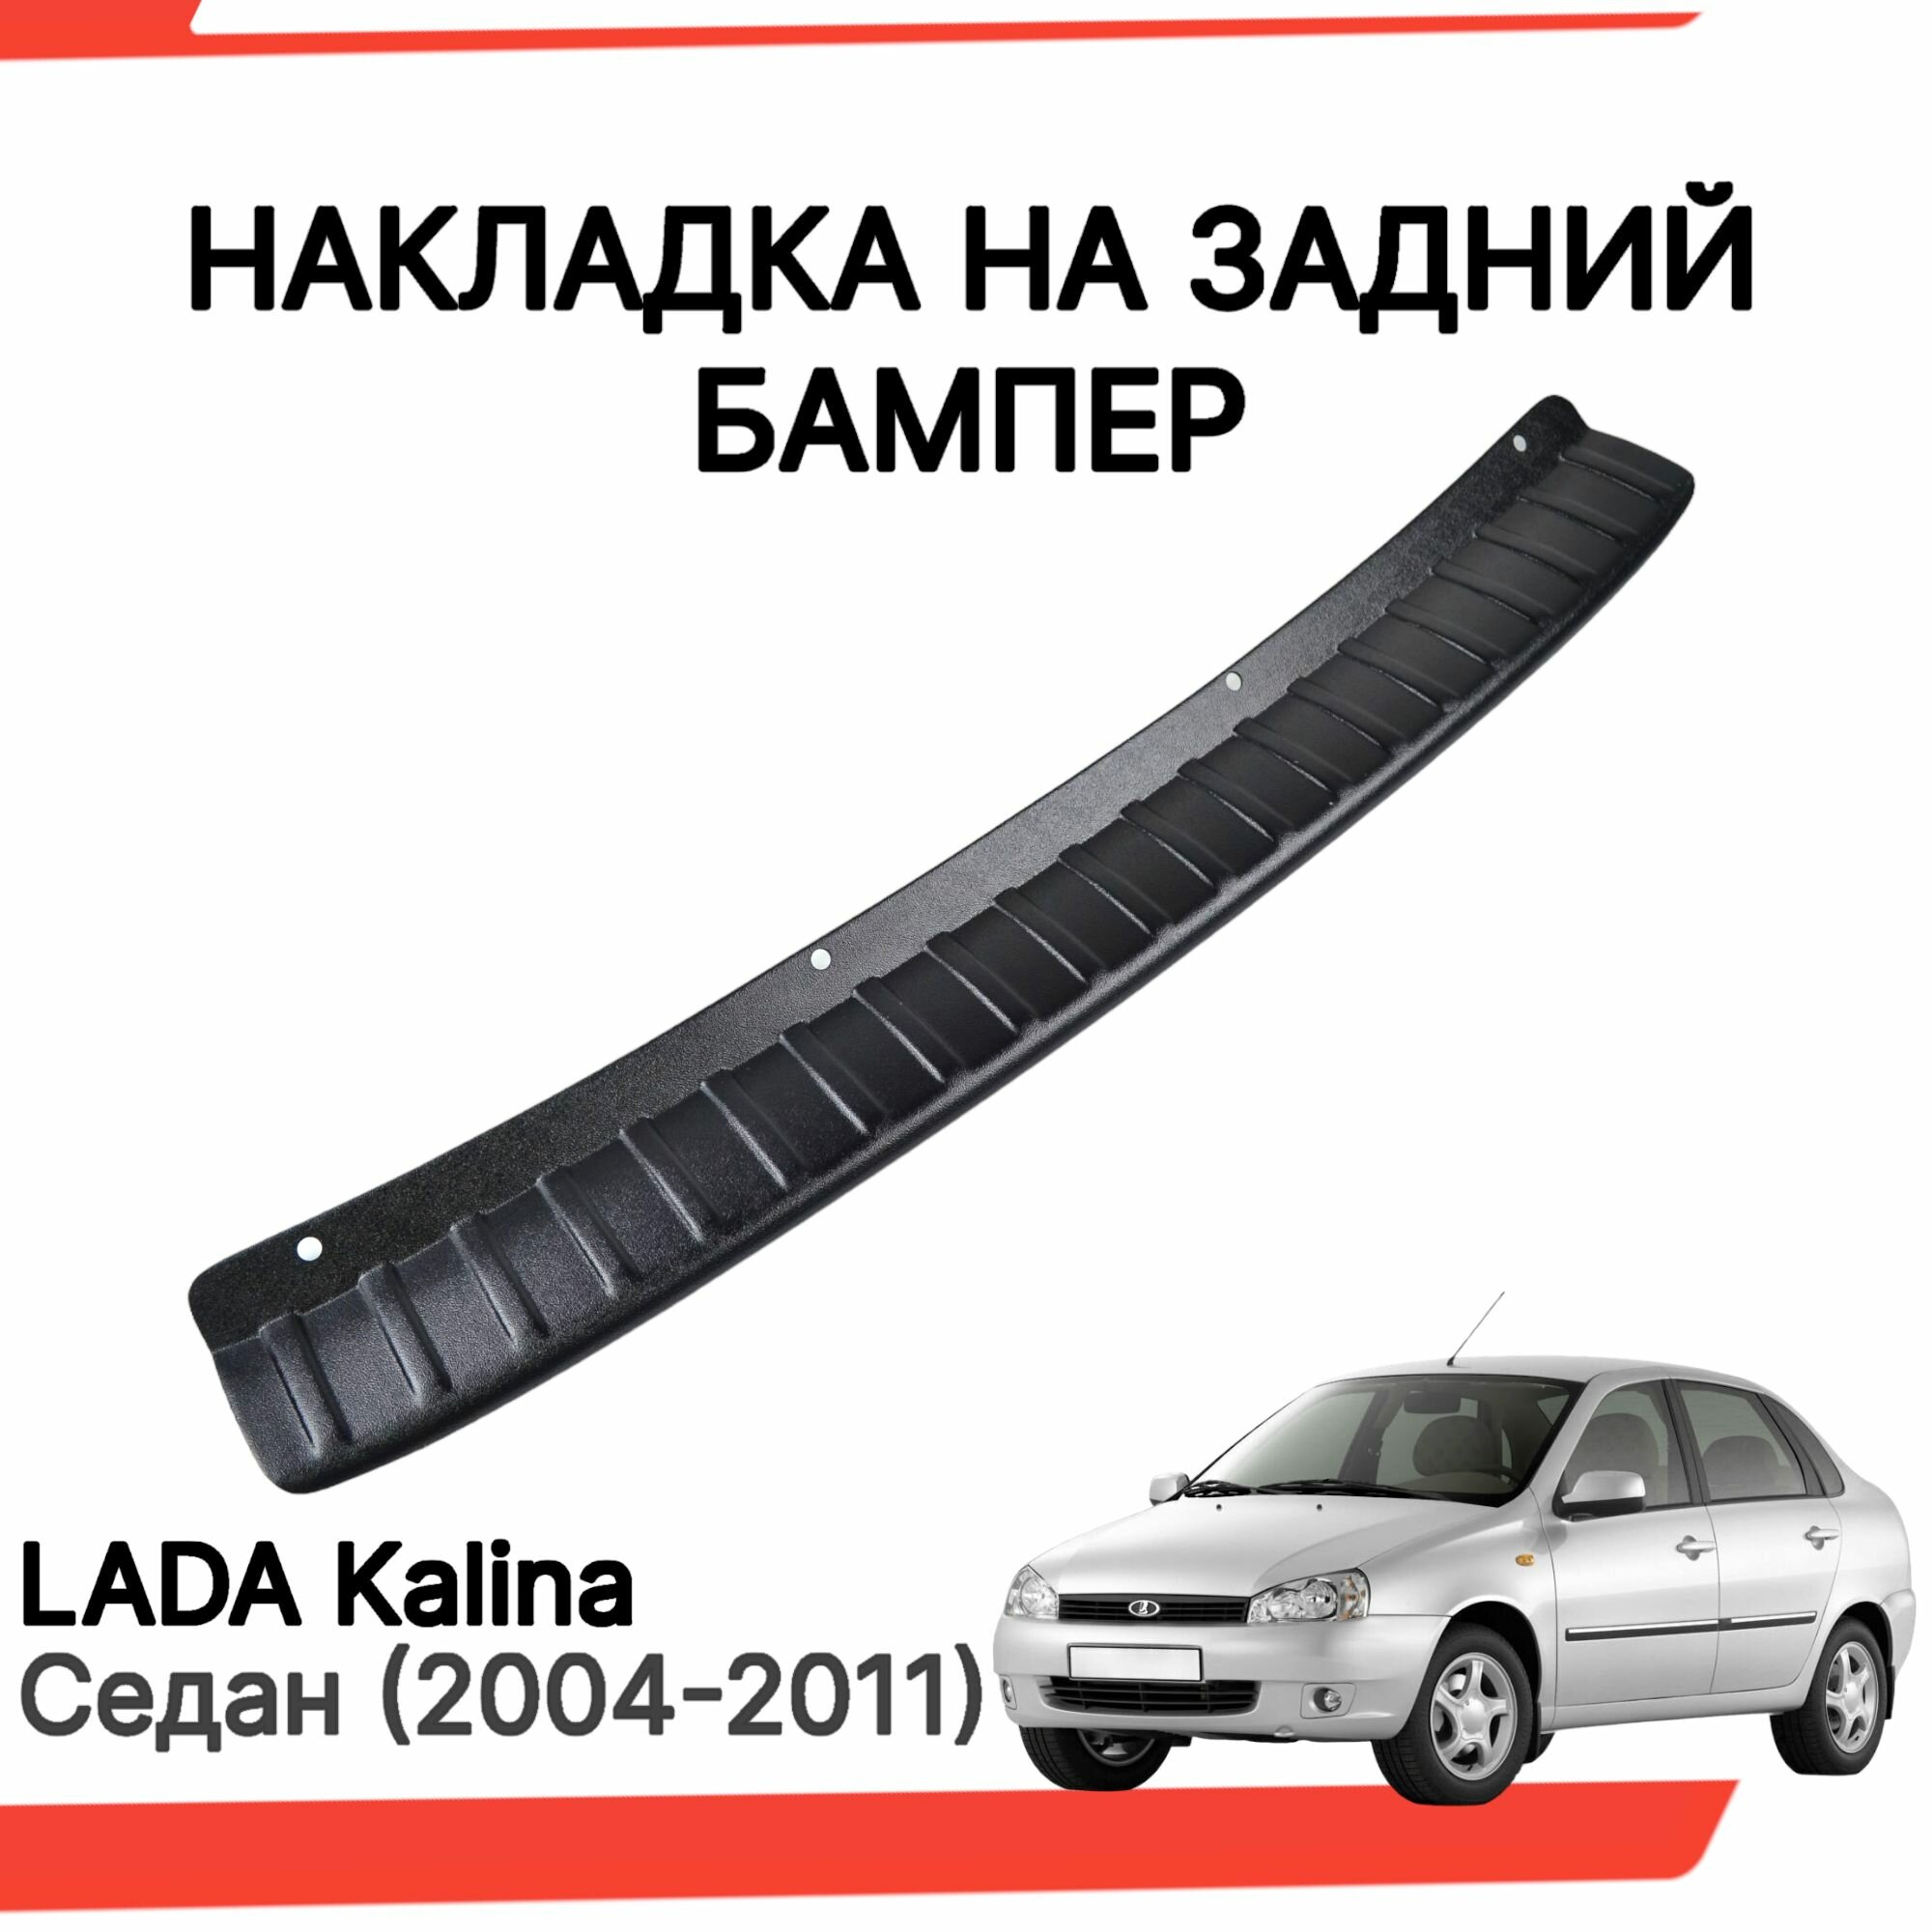 Накладка на задний бампер Лада Калина седан (2004-2013) / Защита заднего бампера Lada Kalina